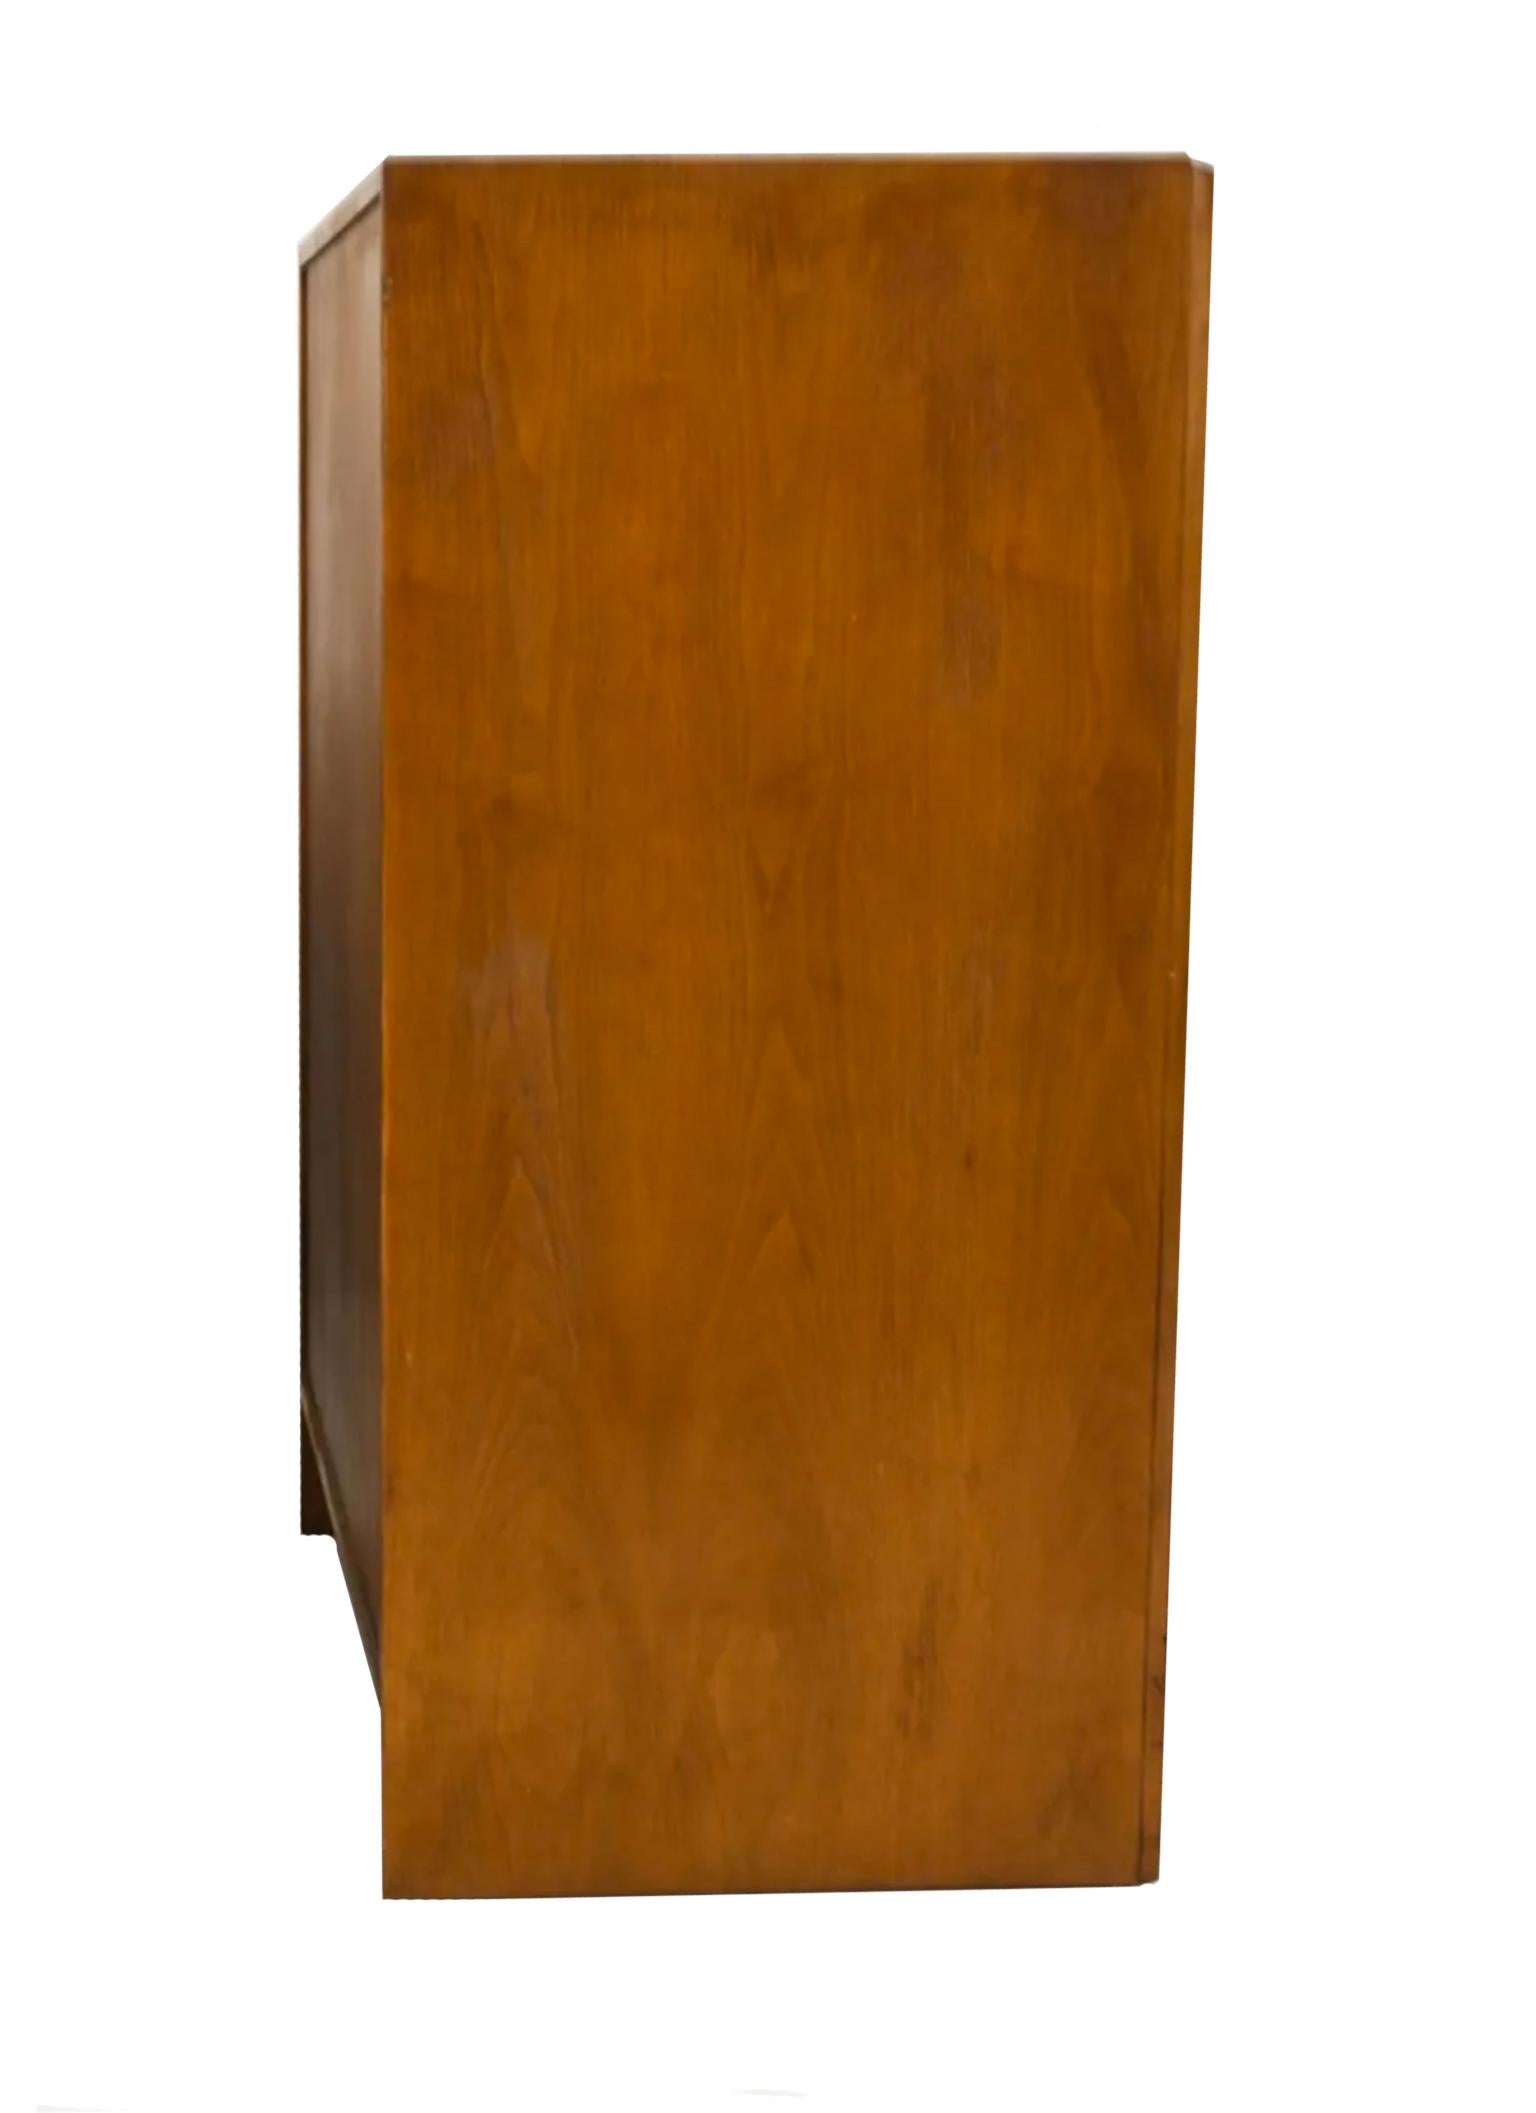 American Wonderful Walnut 5 Drawer tall Dresser by T.H. Robsjohn Gibbings for Widdicomb